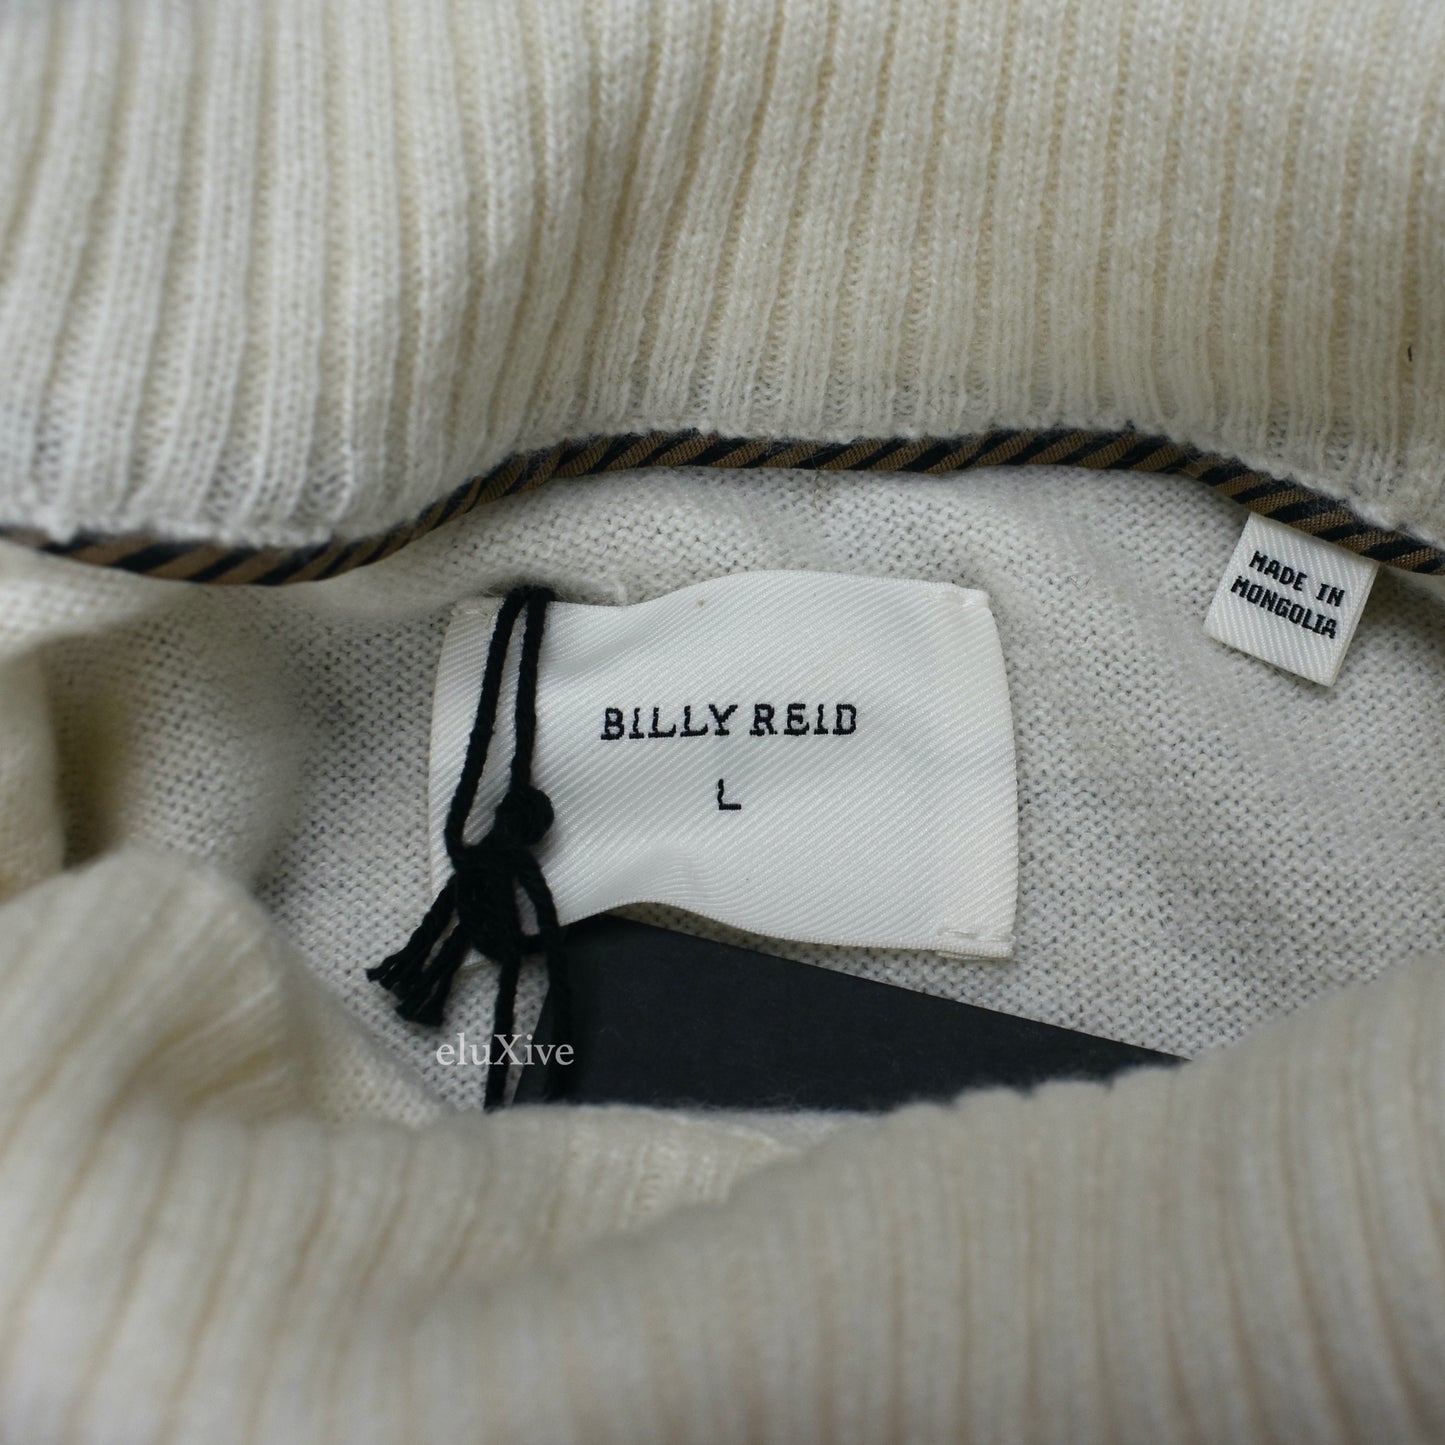 Billy Reid - Cream Cashmere Turtle Neck Sweater